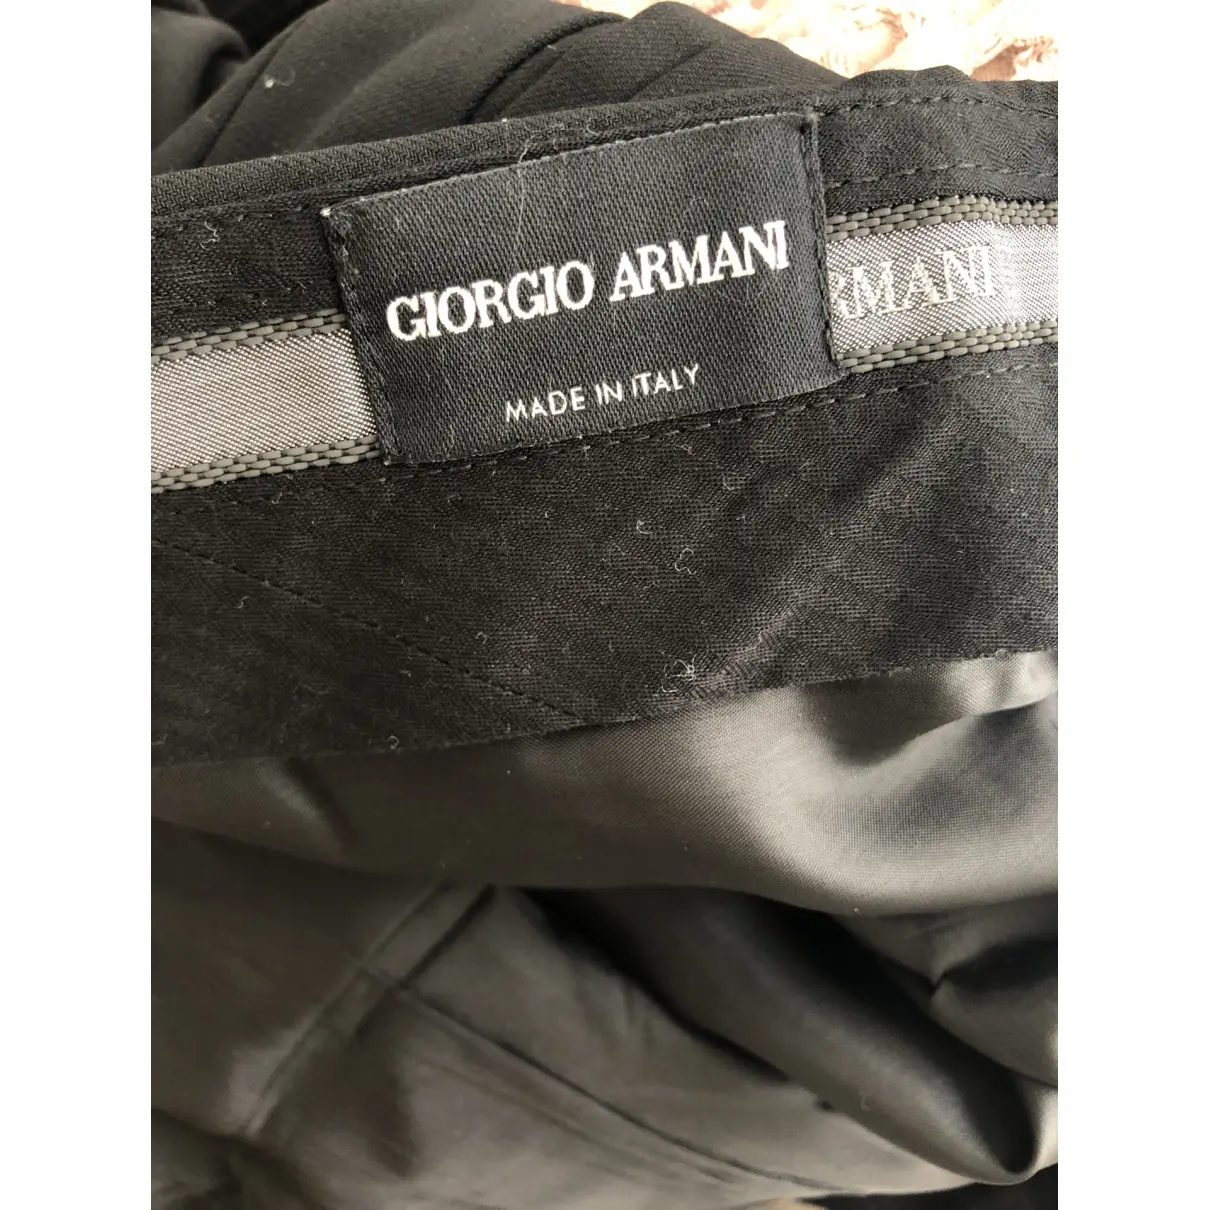 Wool suit Giorgio Armani